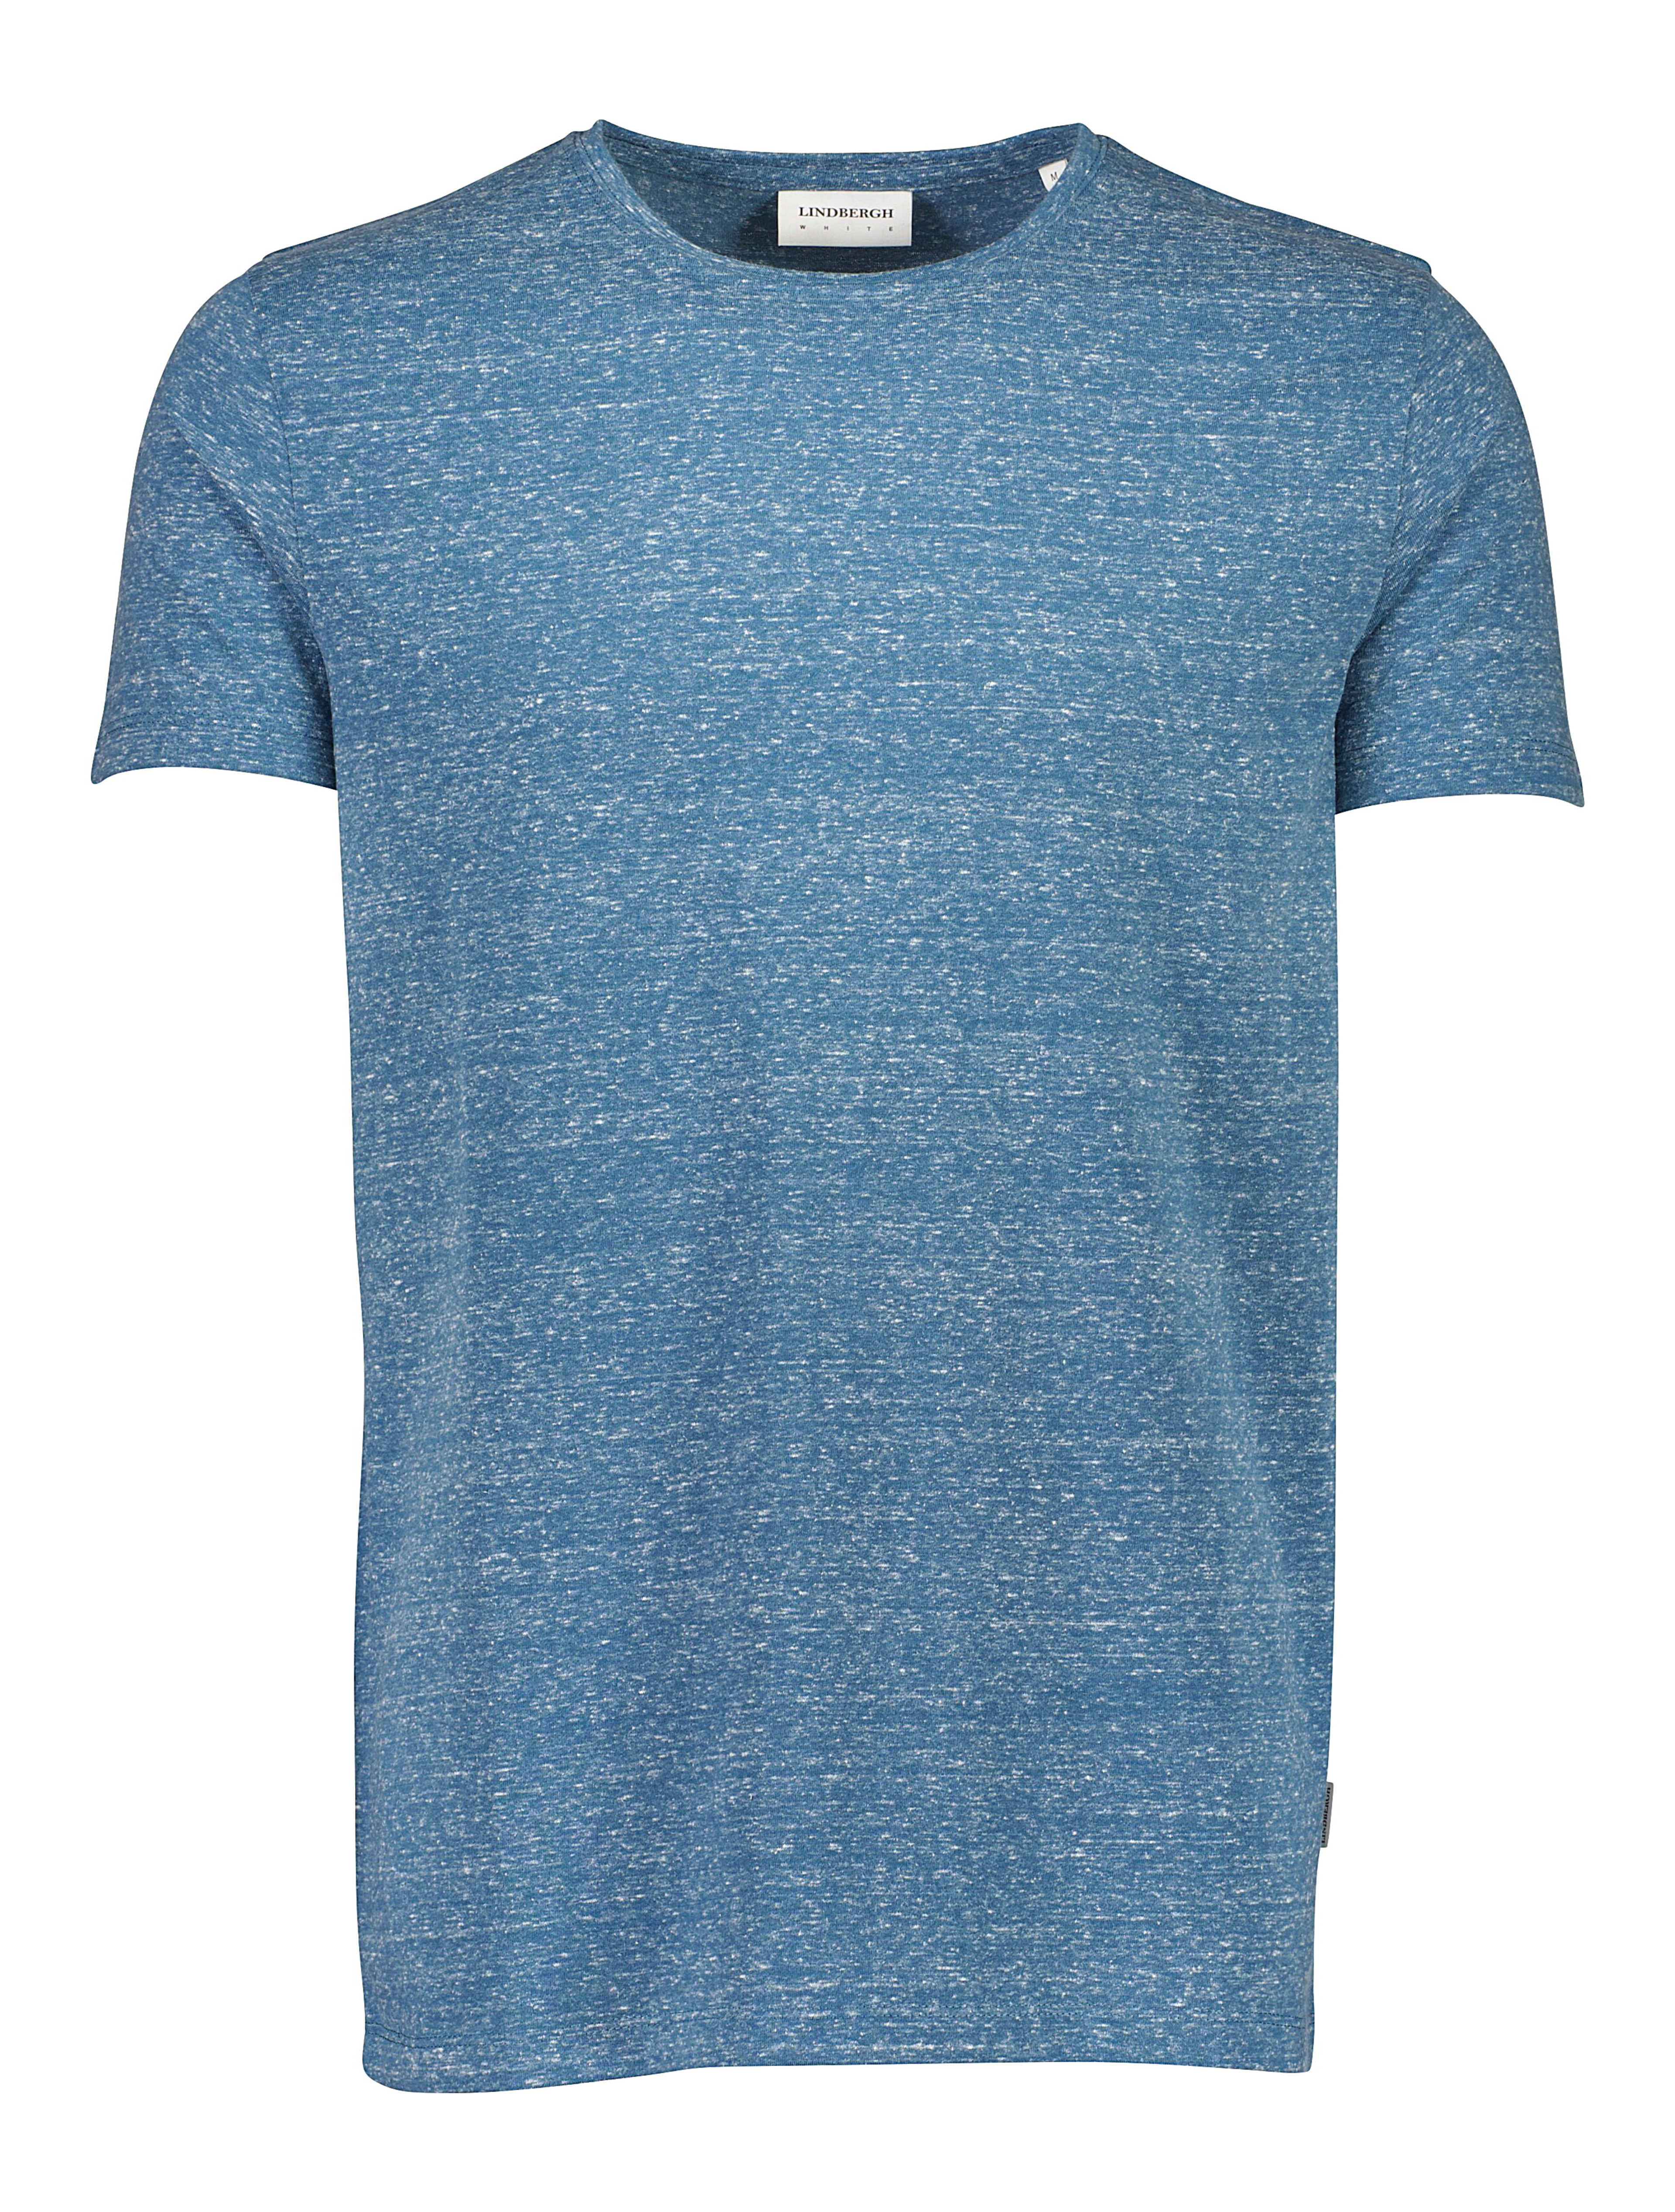 Lindbergh T-Shirt blau / petrol